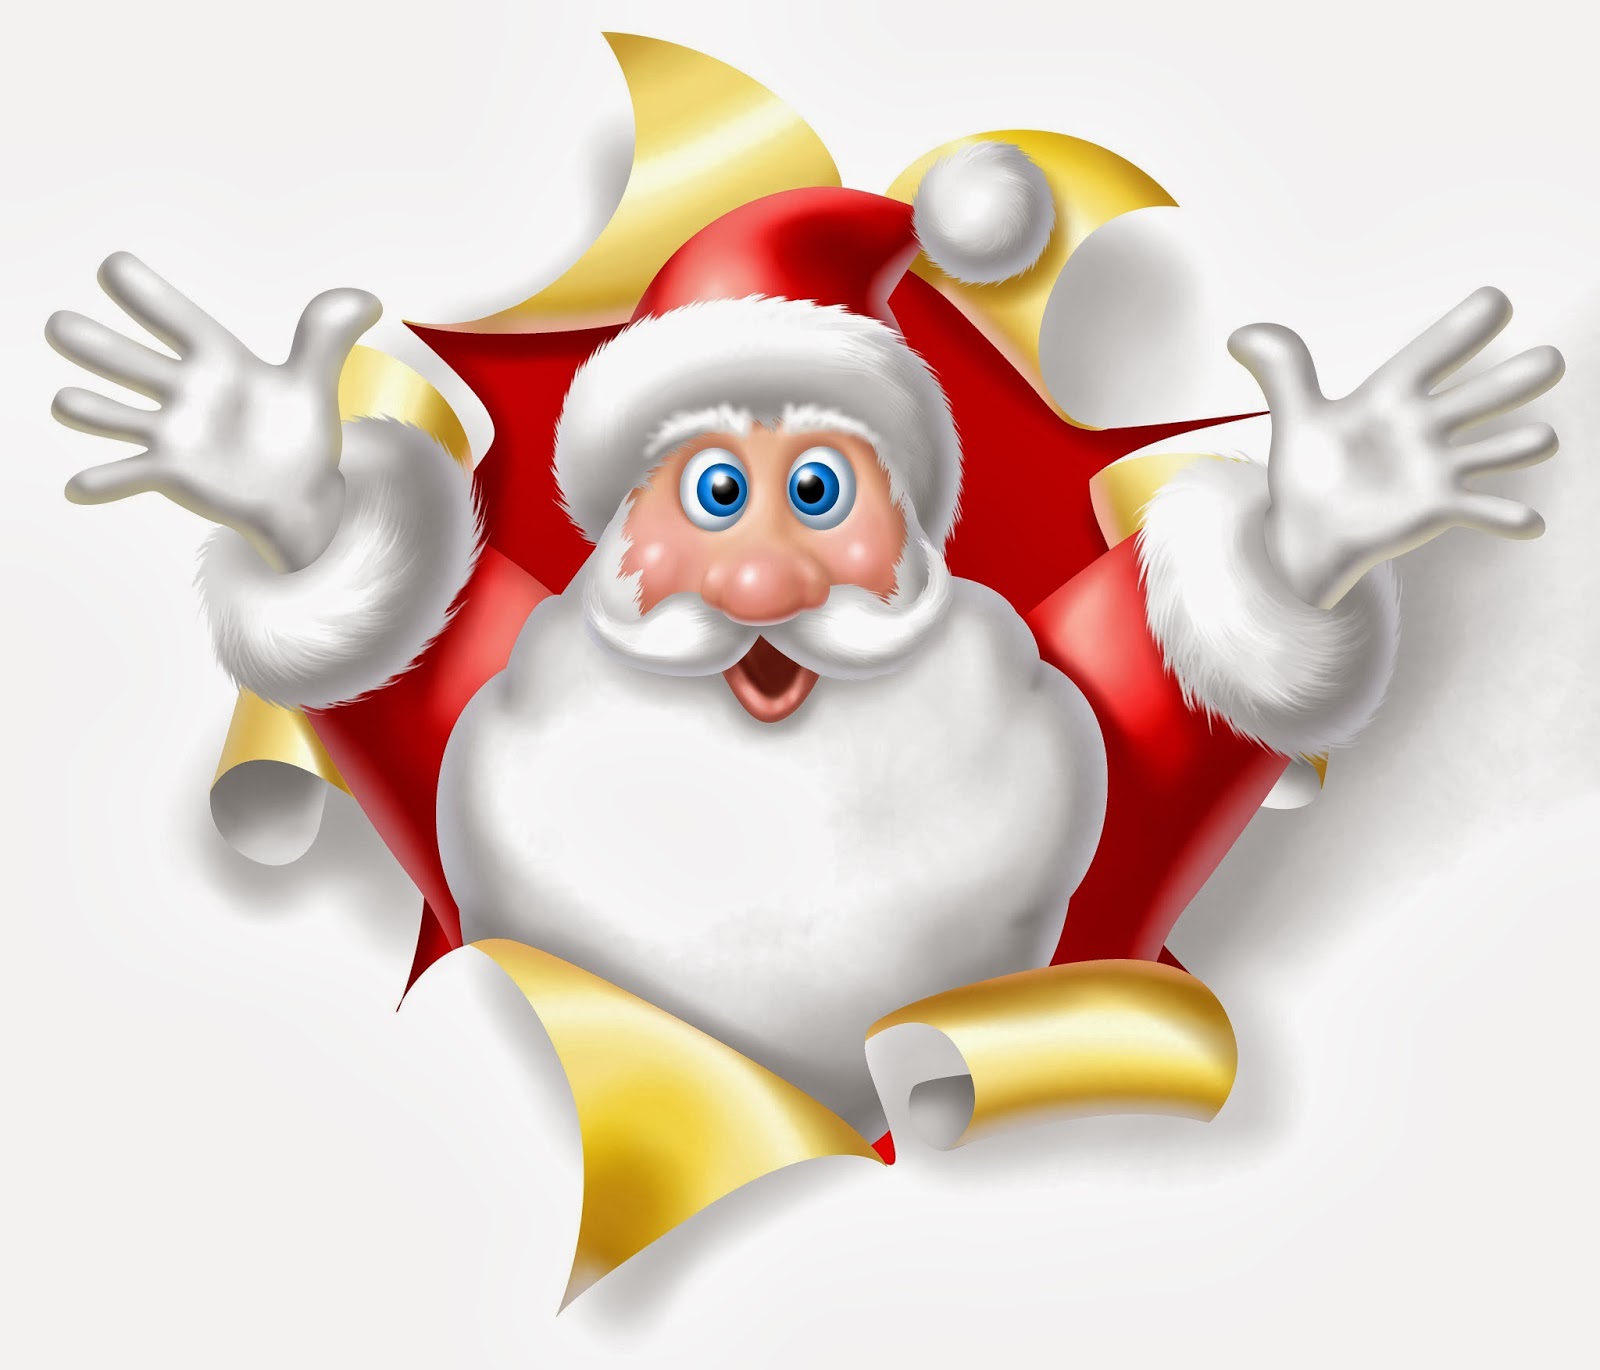 EQM Capital Weekly Market Recap 12/26/14 - A Santa Claus Rally 